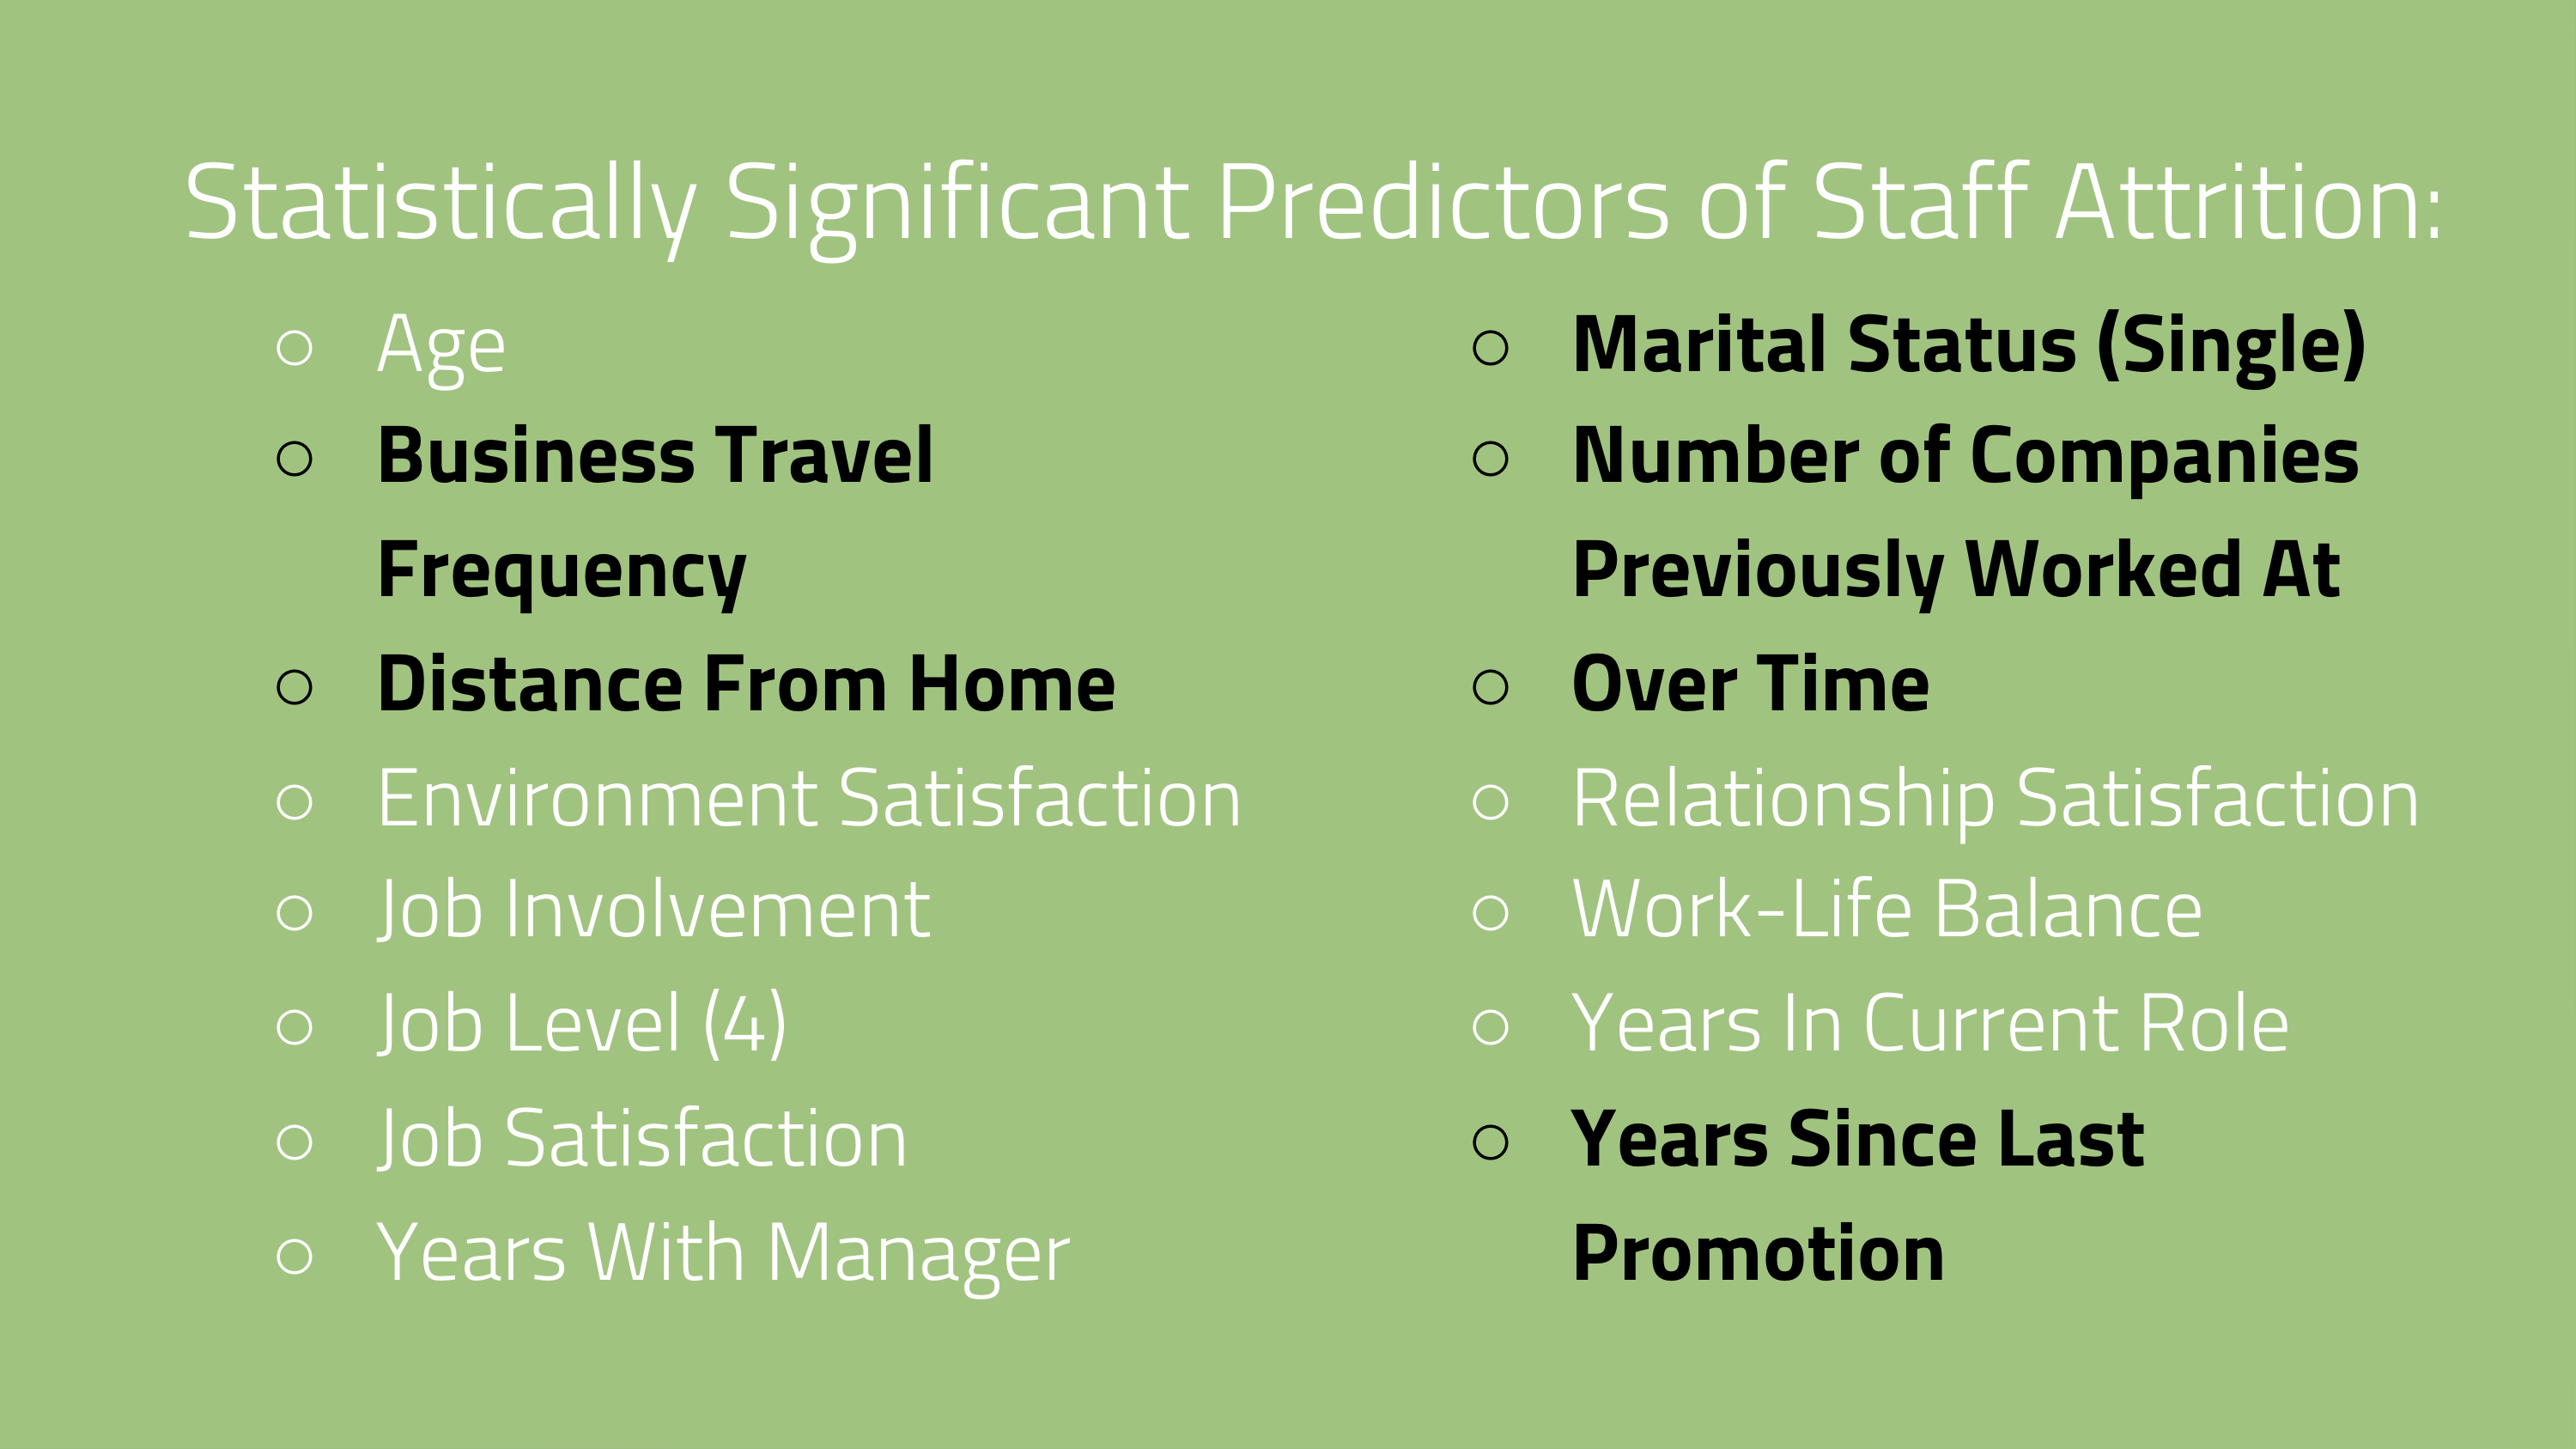 Statistically Significant Predictors of Staff Attrition